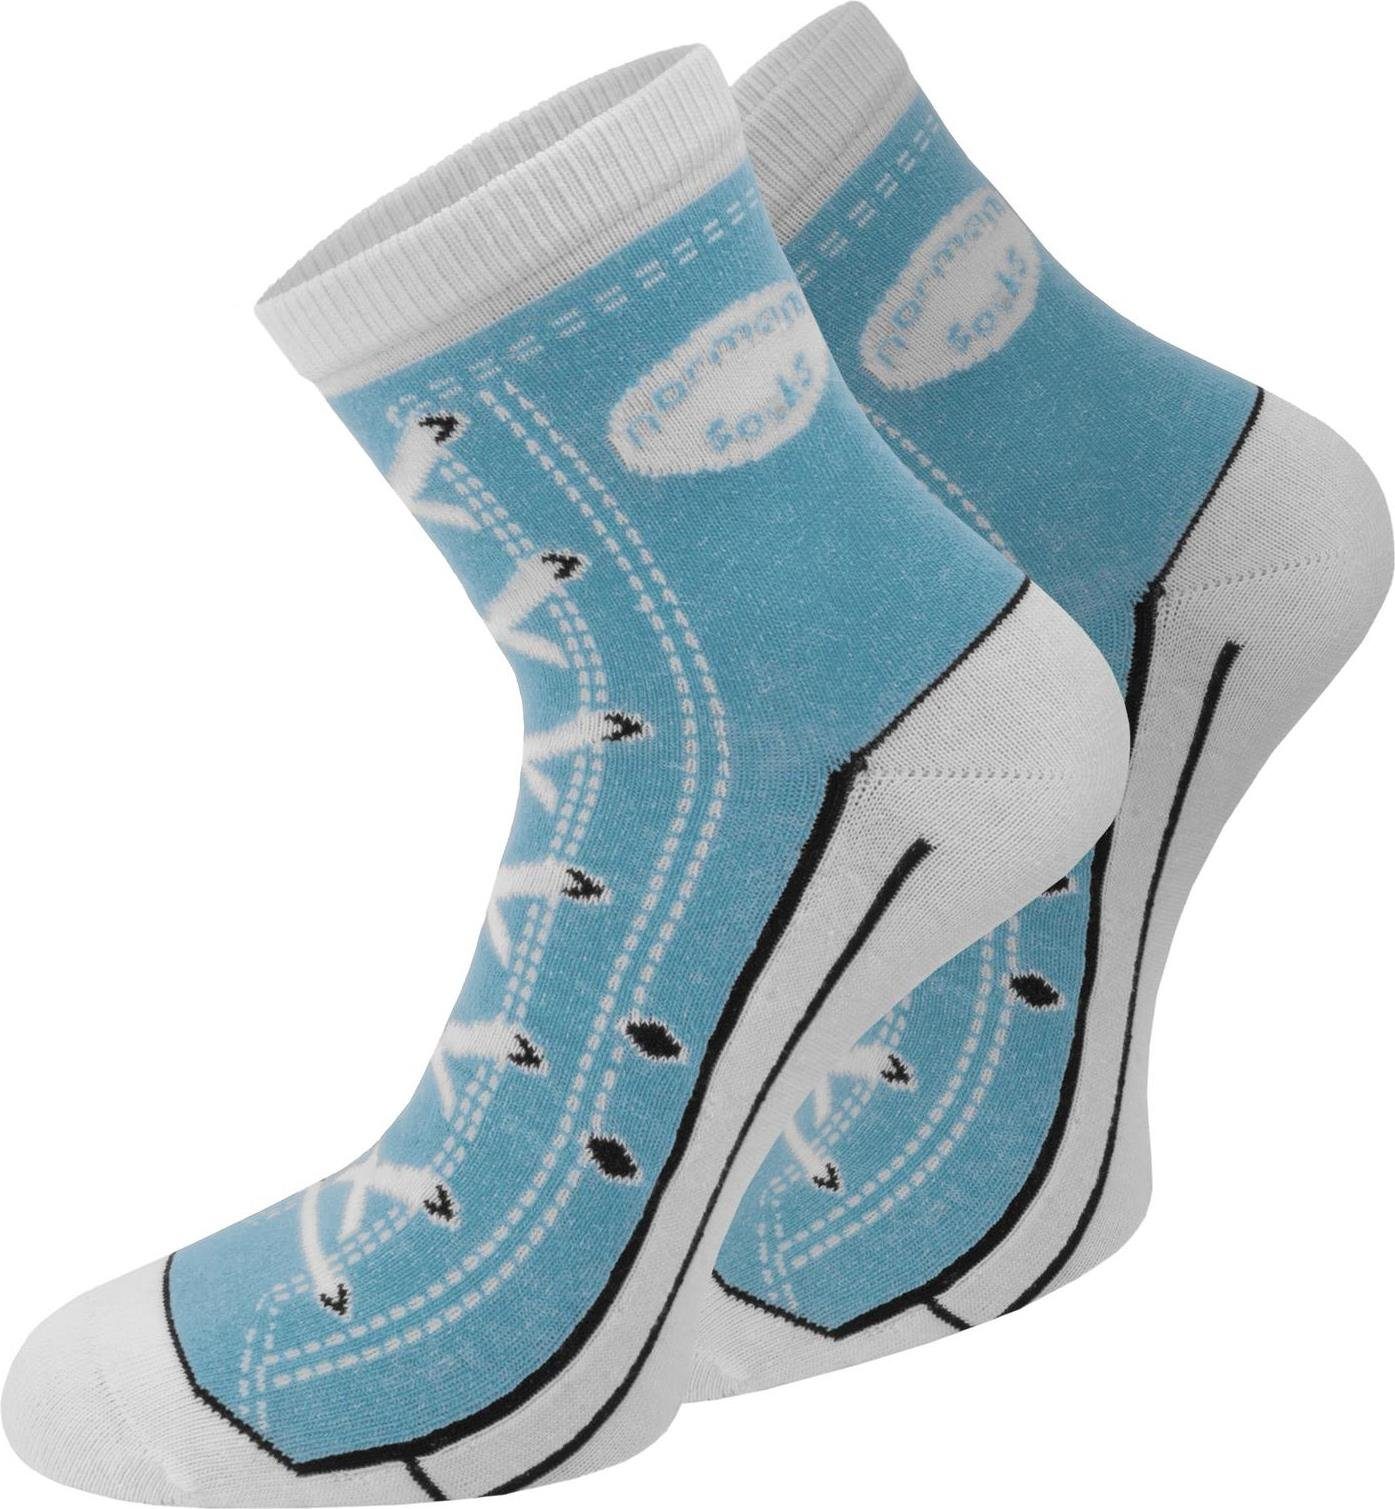 Socken faltenfreier Paar Paar) (4er-Set, Hellblau Basicsocken im normani 4 passgenauer, 4 Schuh-Design Sitz